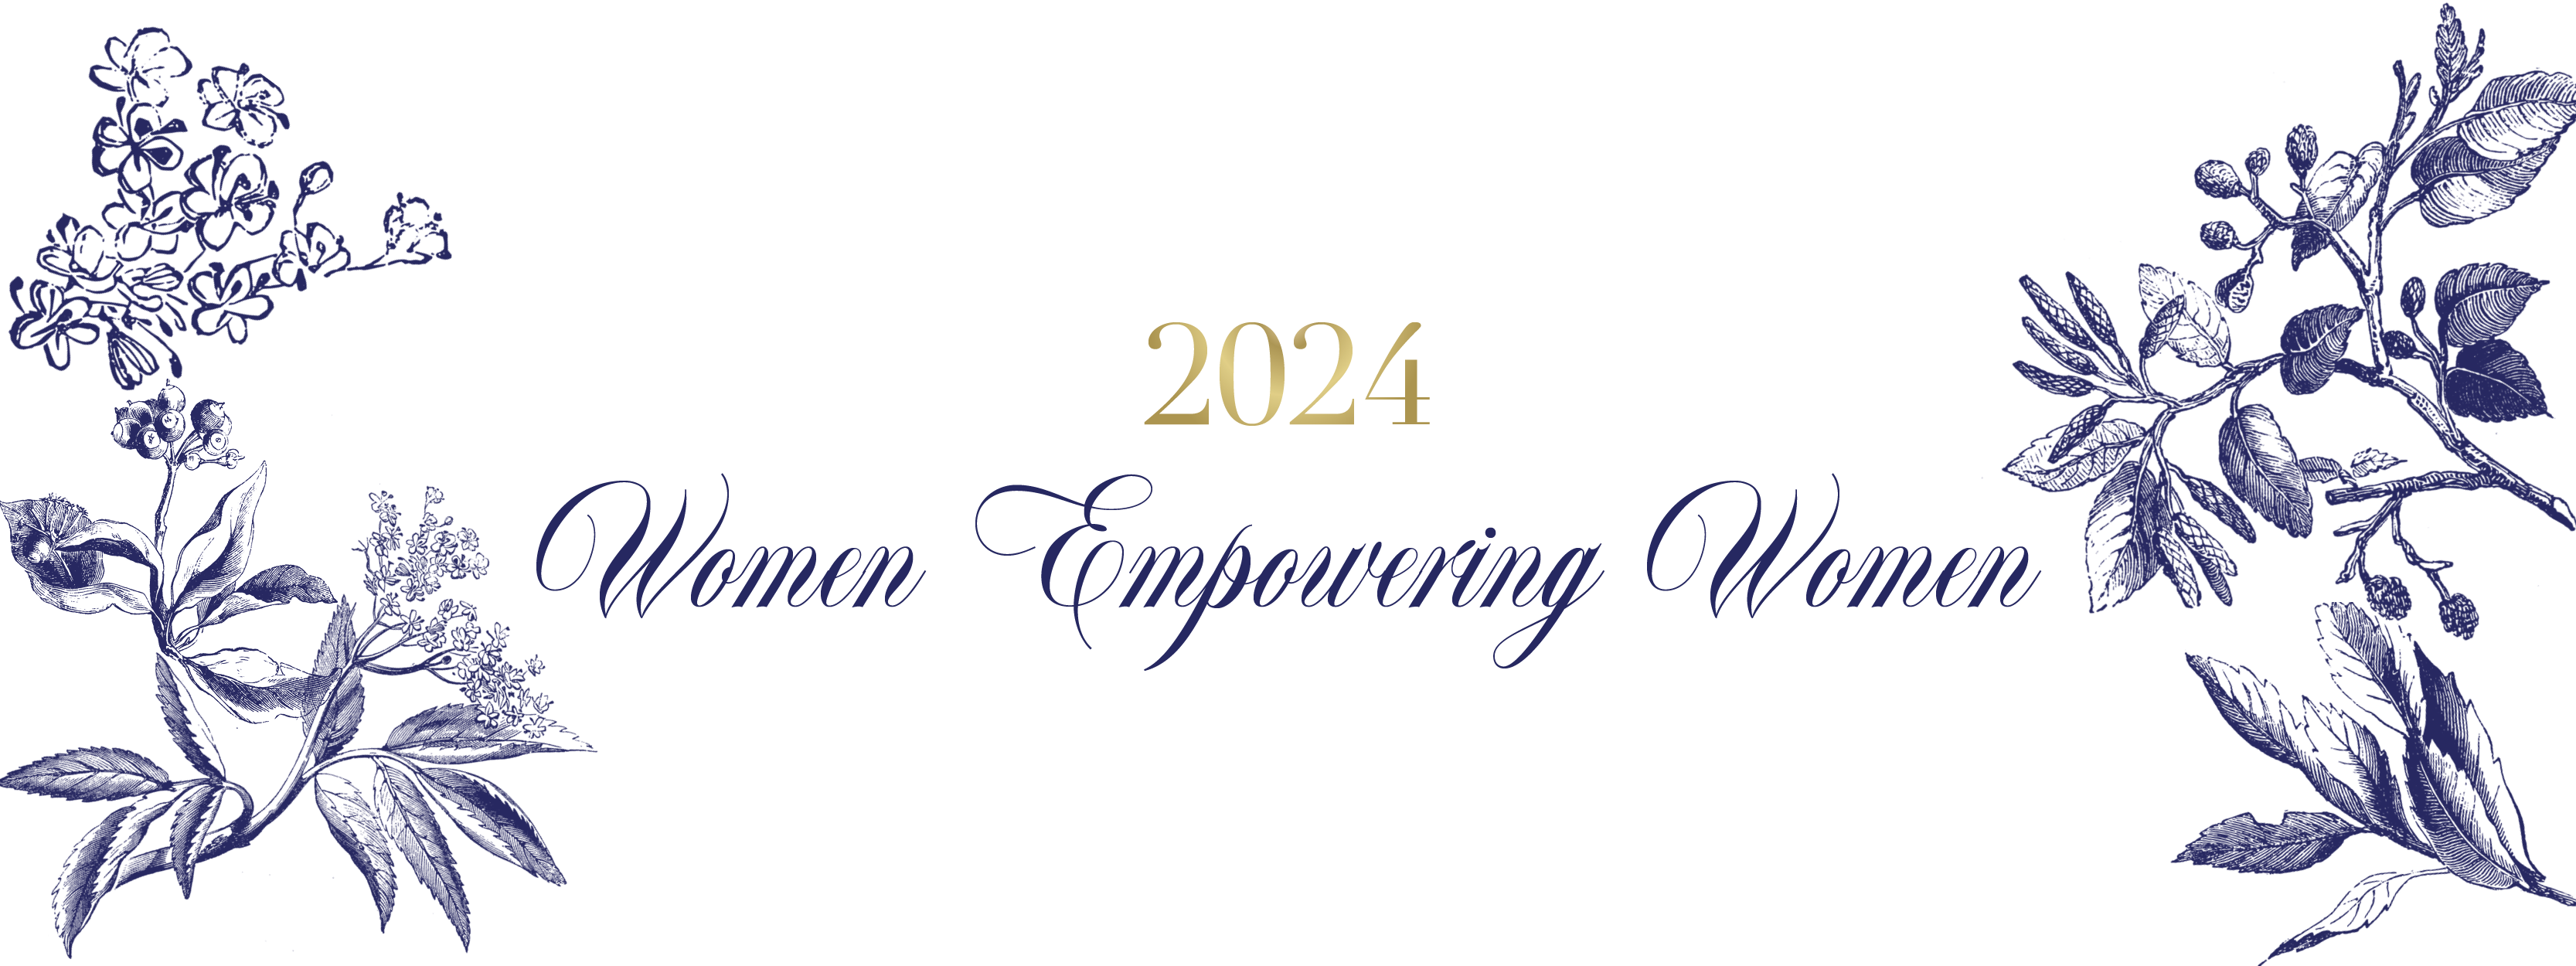 Women Empowering Women 2024